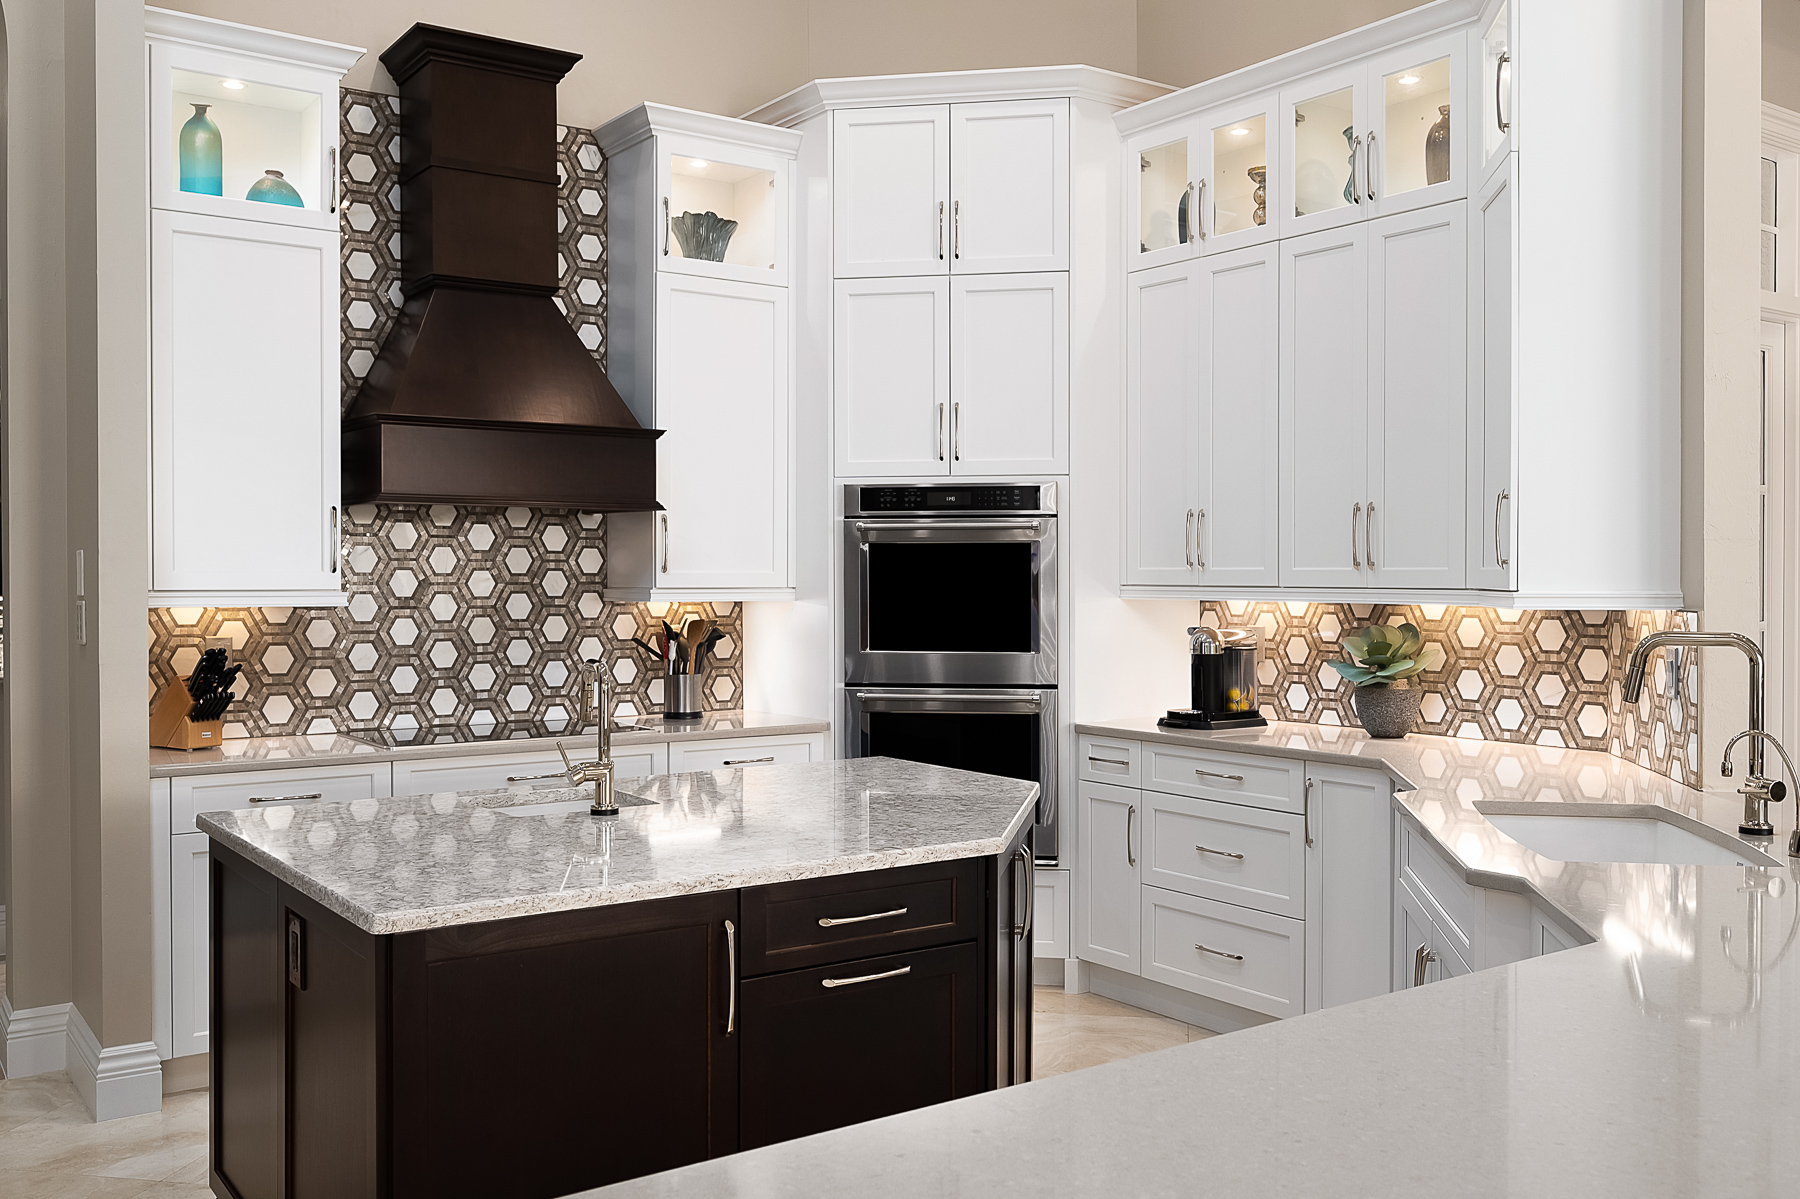 Updated kitchen has white cabinets, island in espresso finish, quartz countertops and decorative backsplash tile